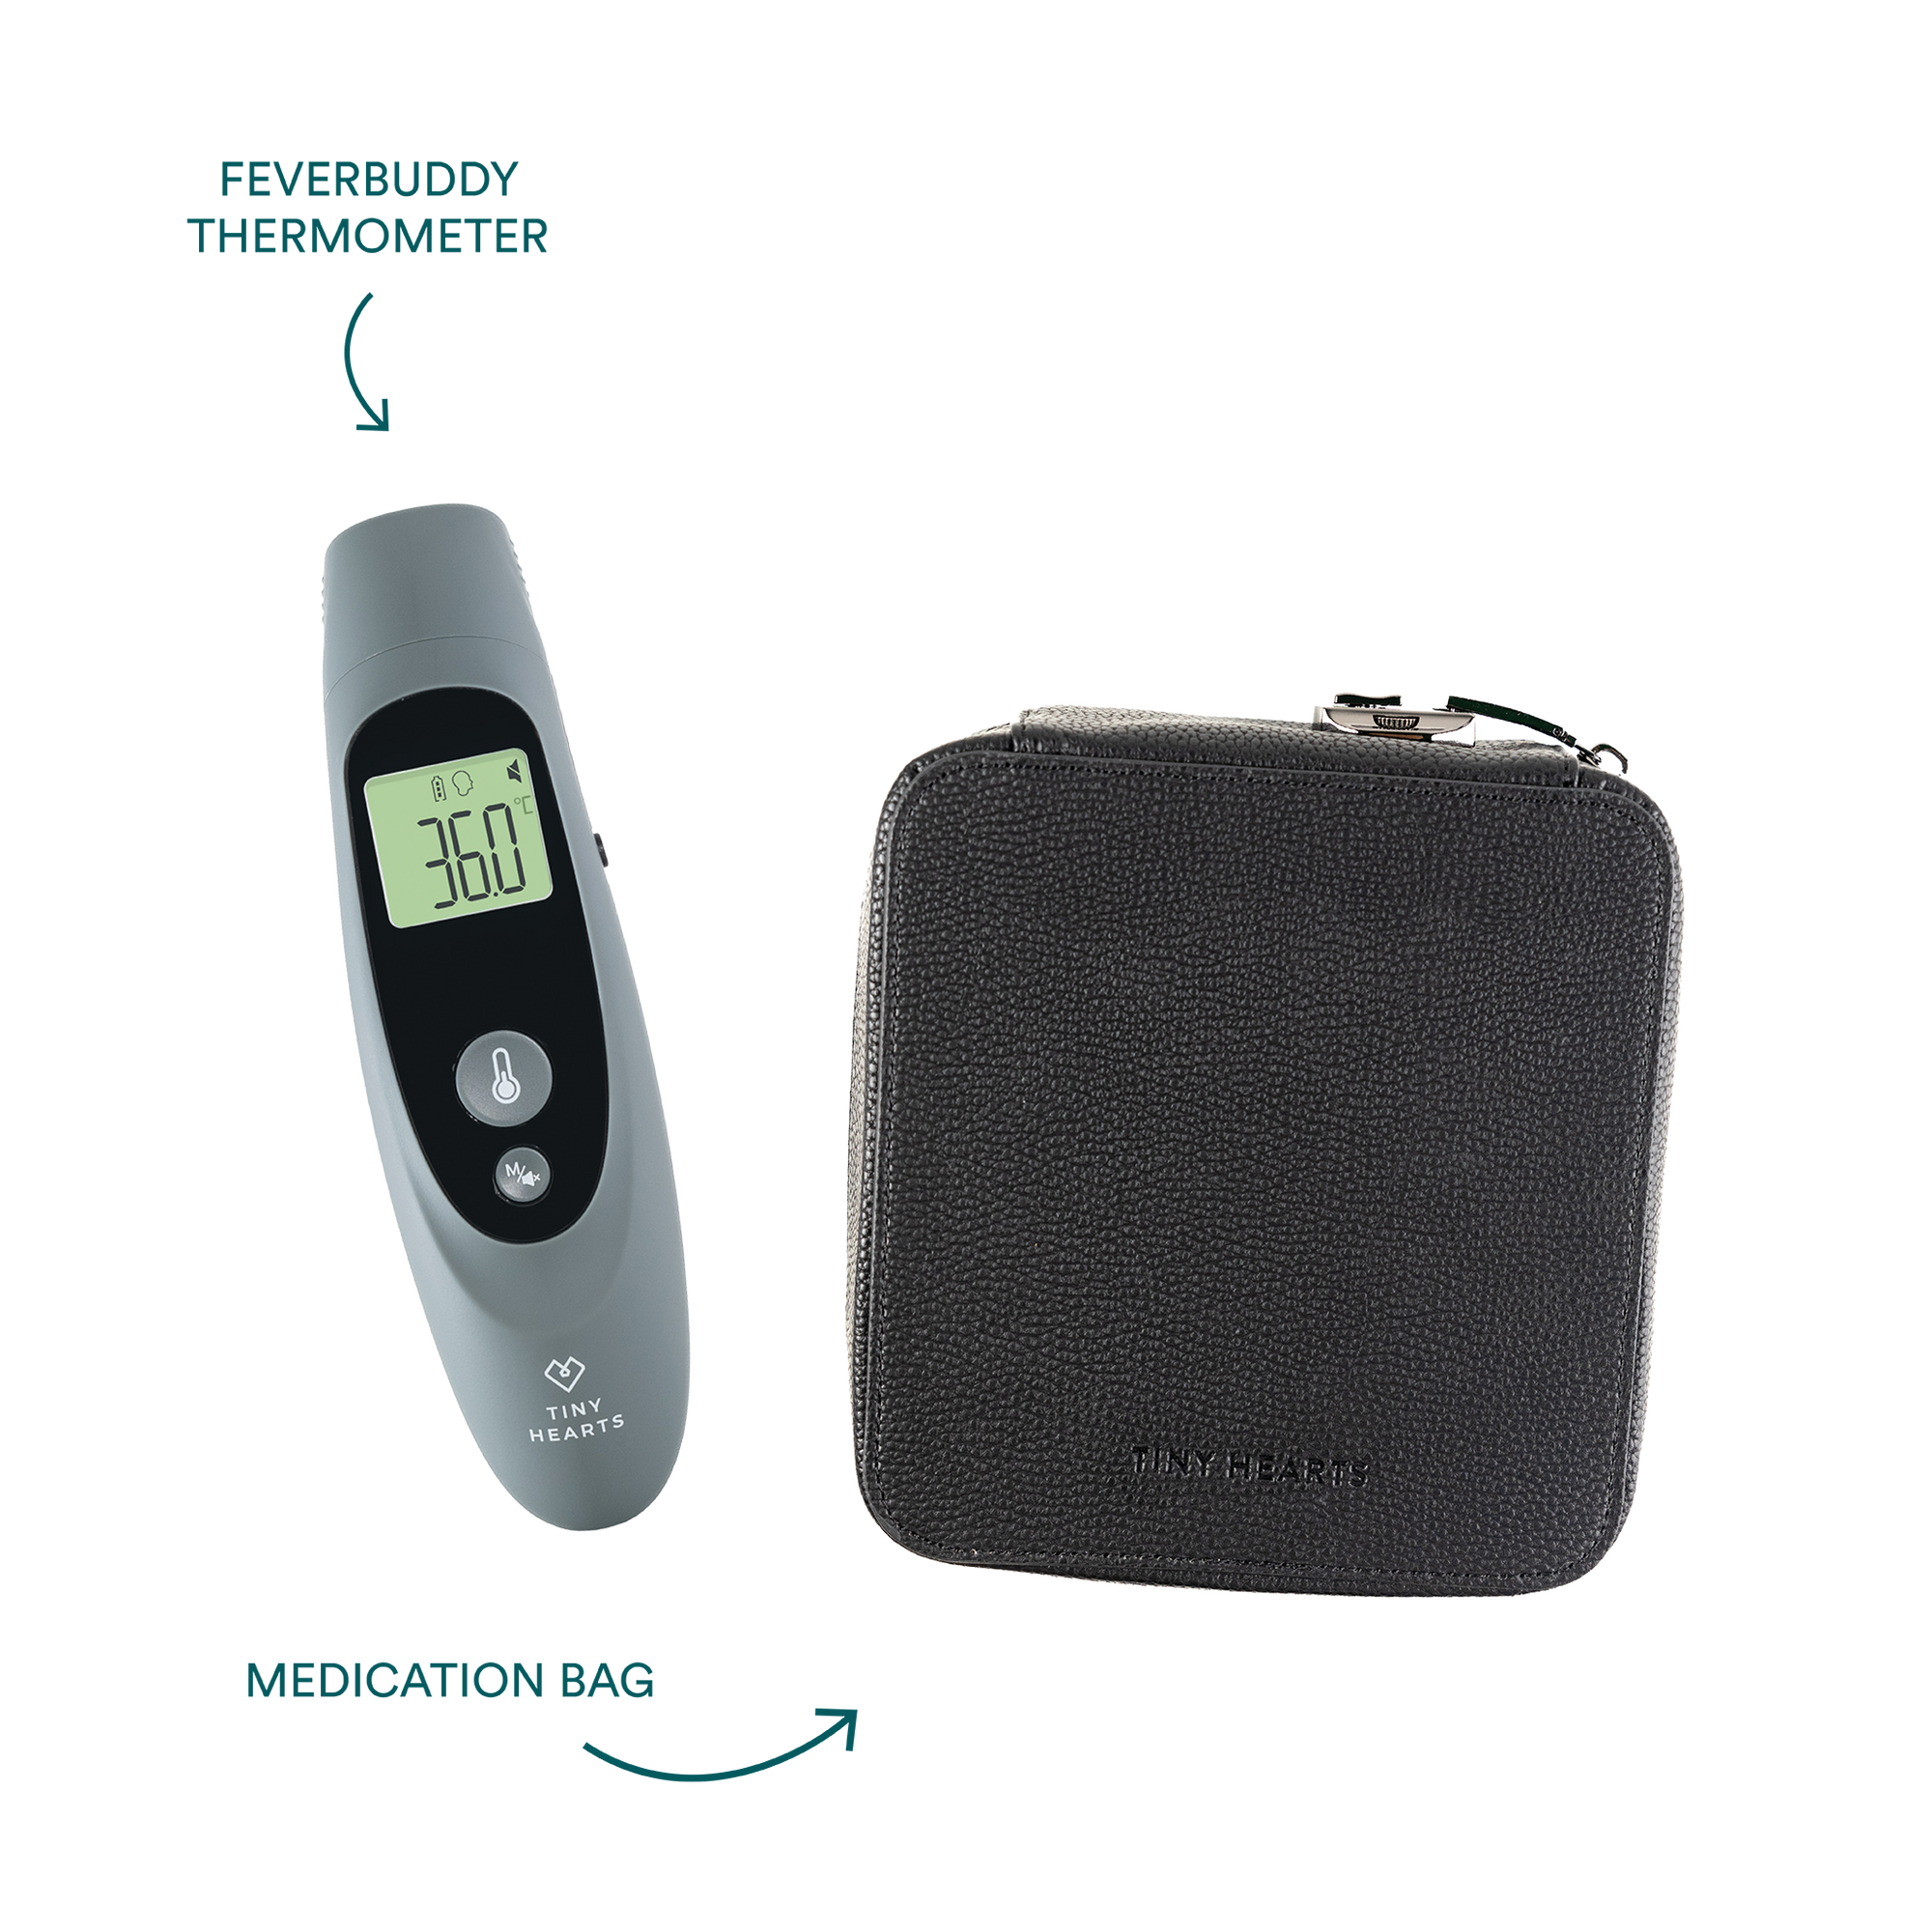 Thermometer & Medication Bag Bundle